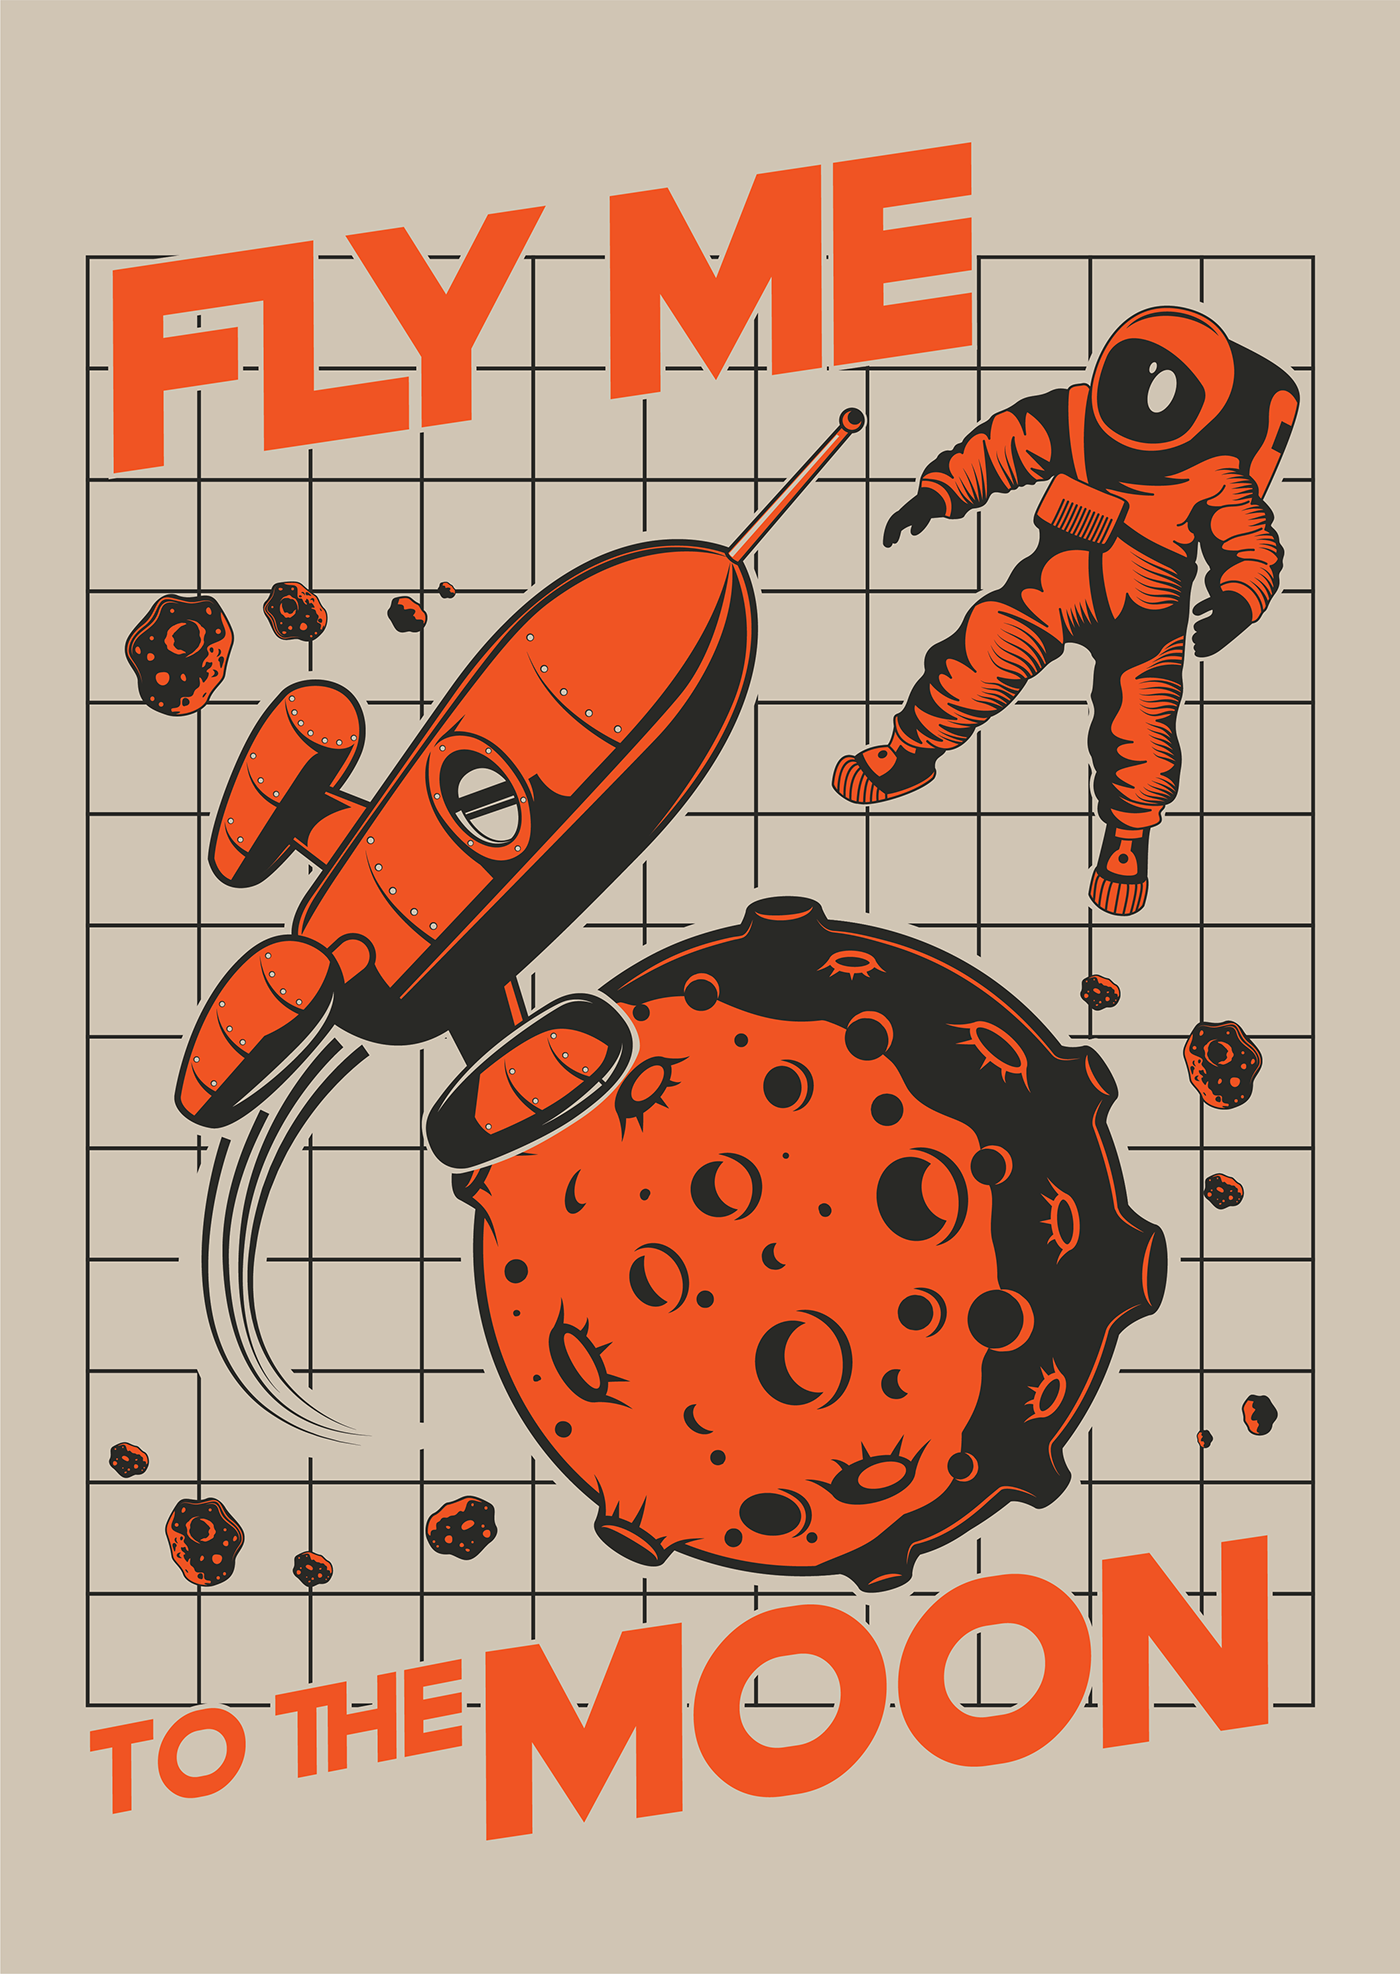 Space design astronaut Poster Design adobe illustrator vector artwork